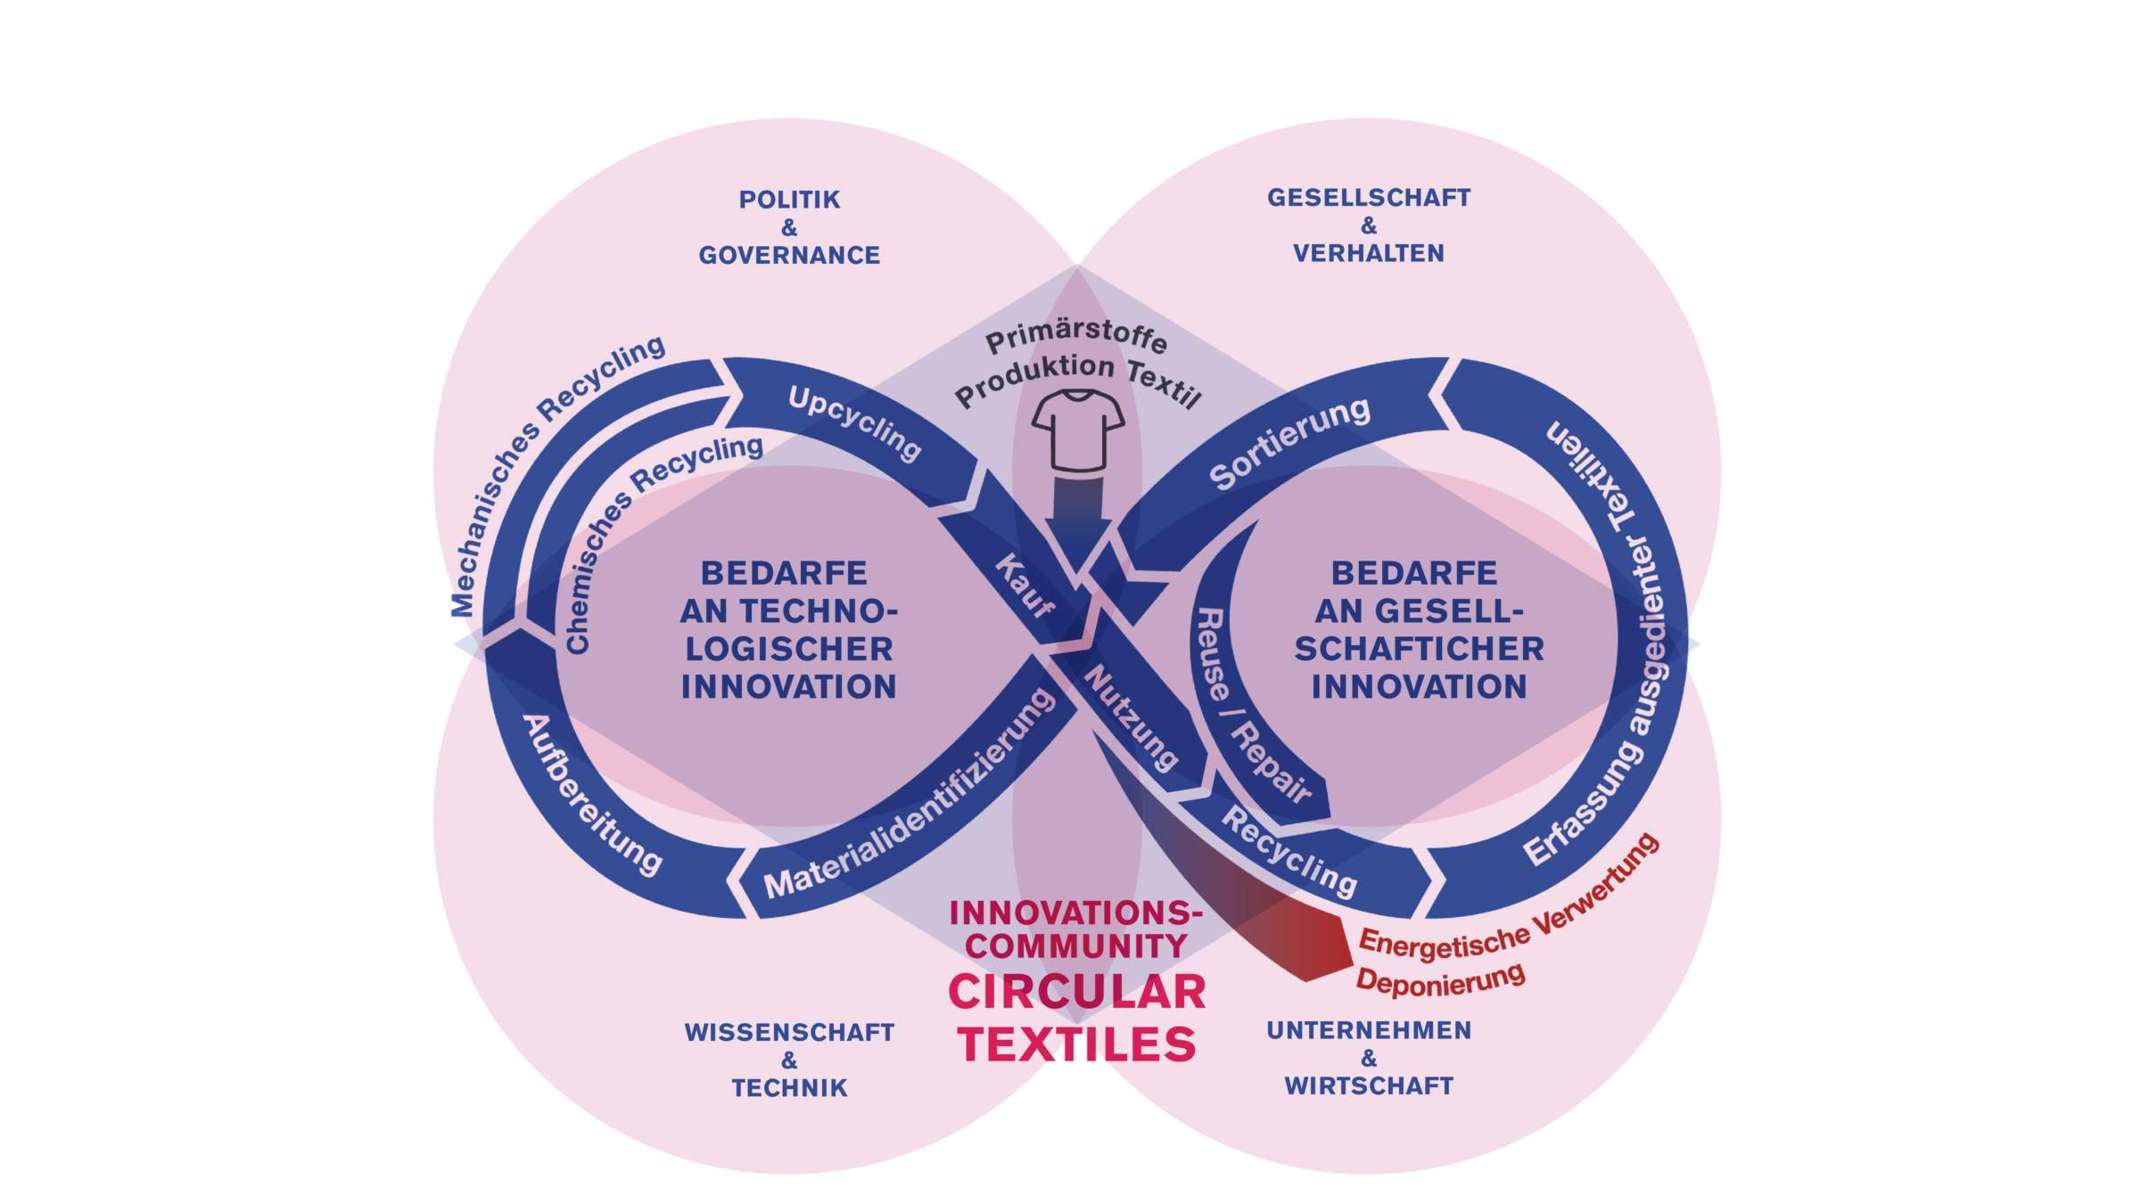 Circular Textiles